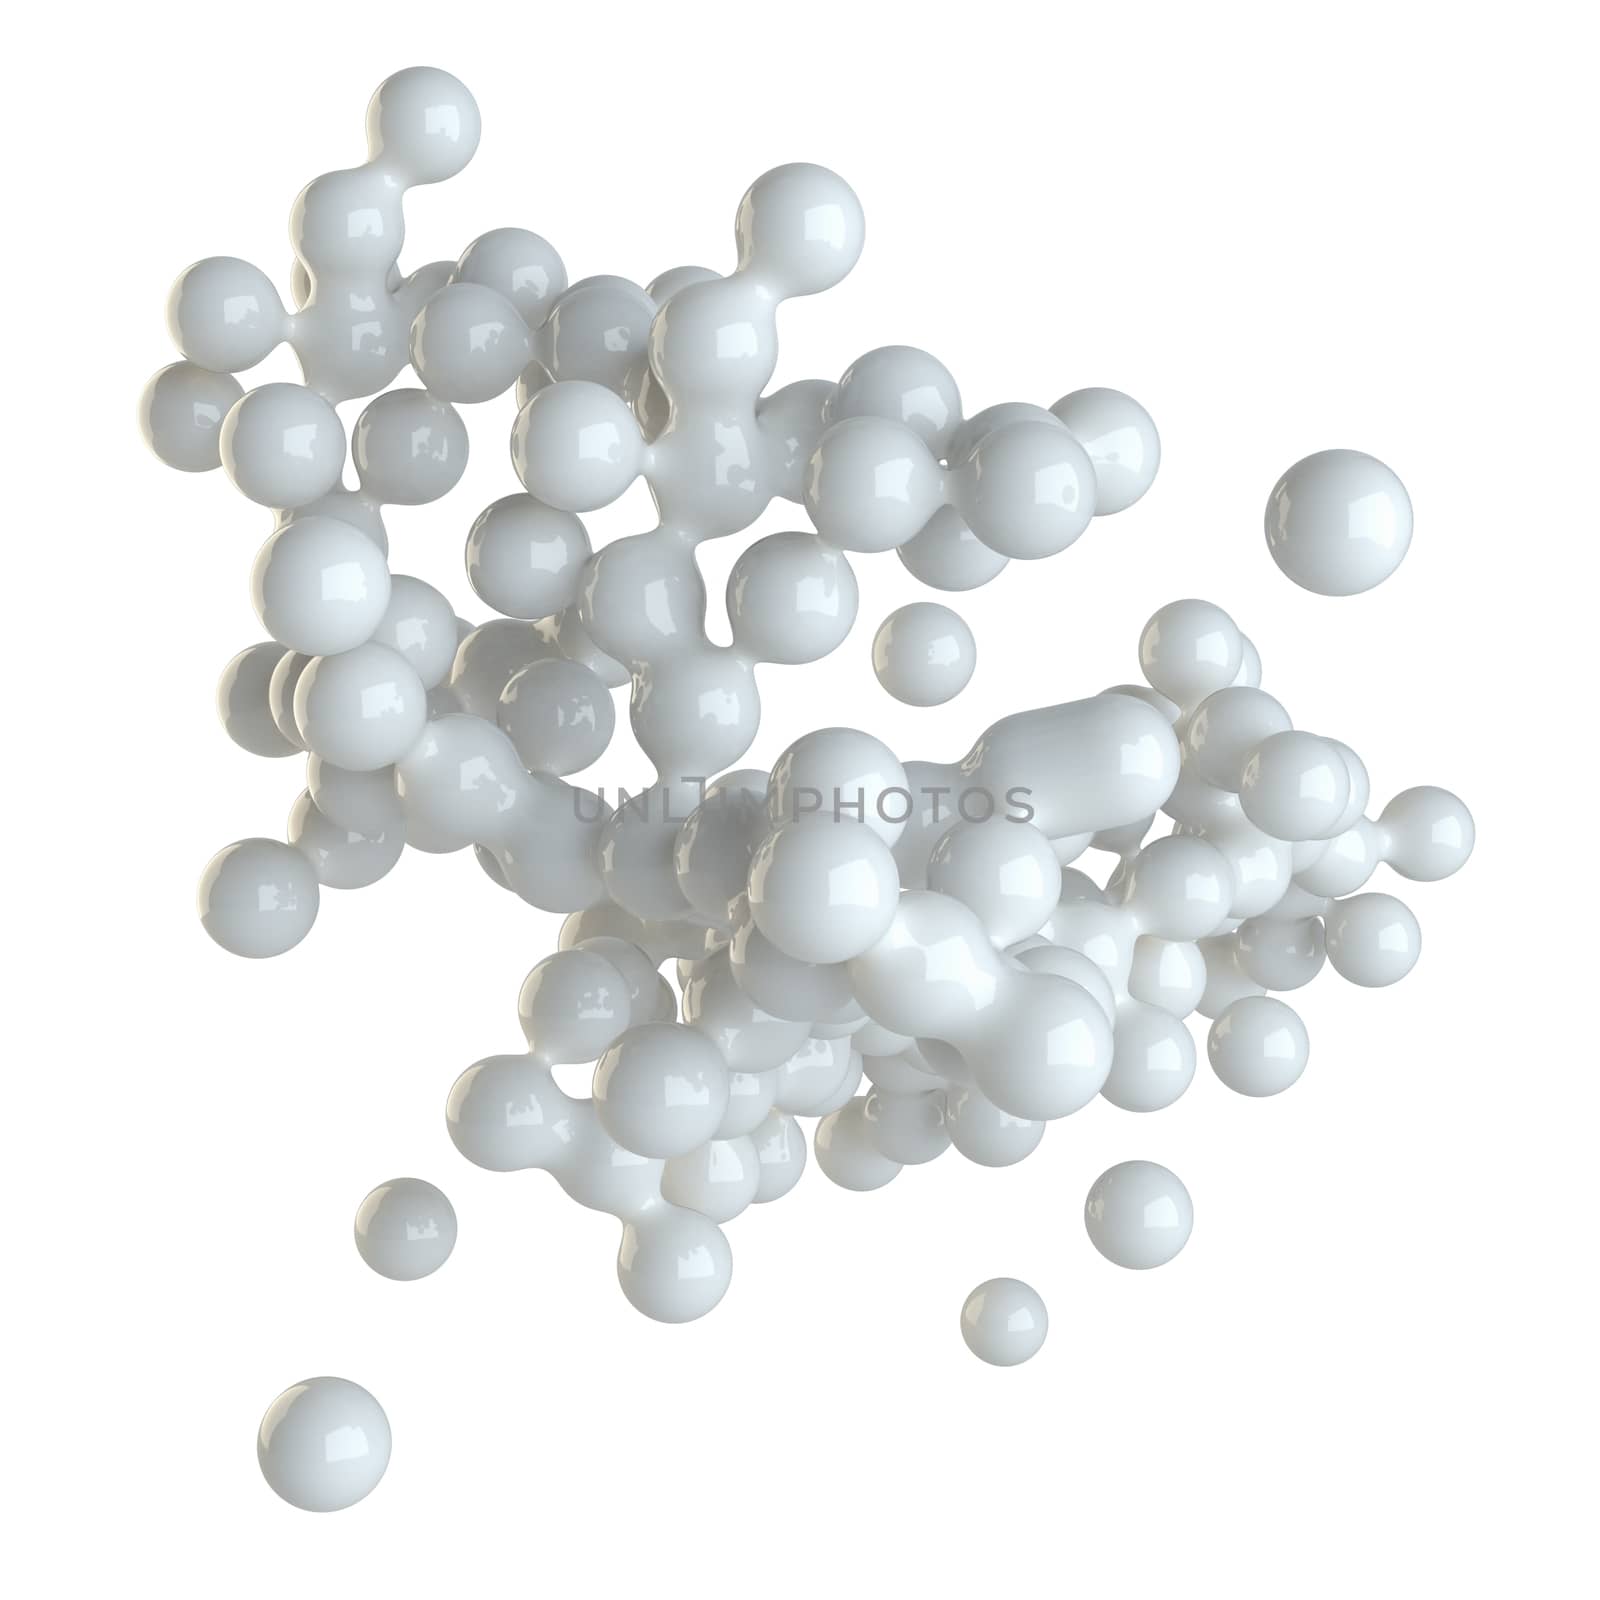 Minimalistic white background with balls. 3D illustration